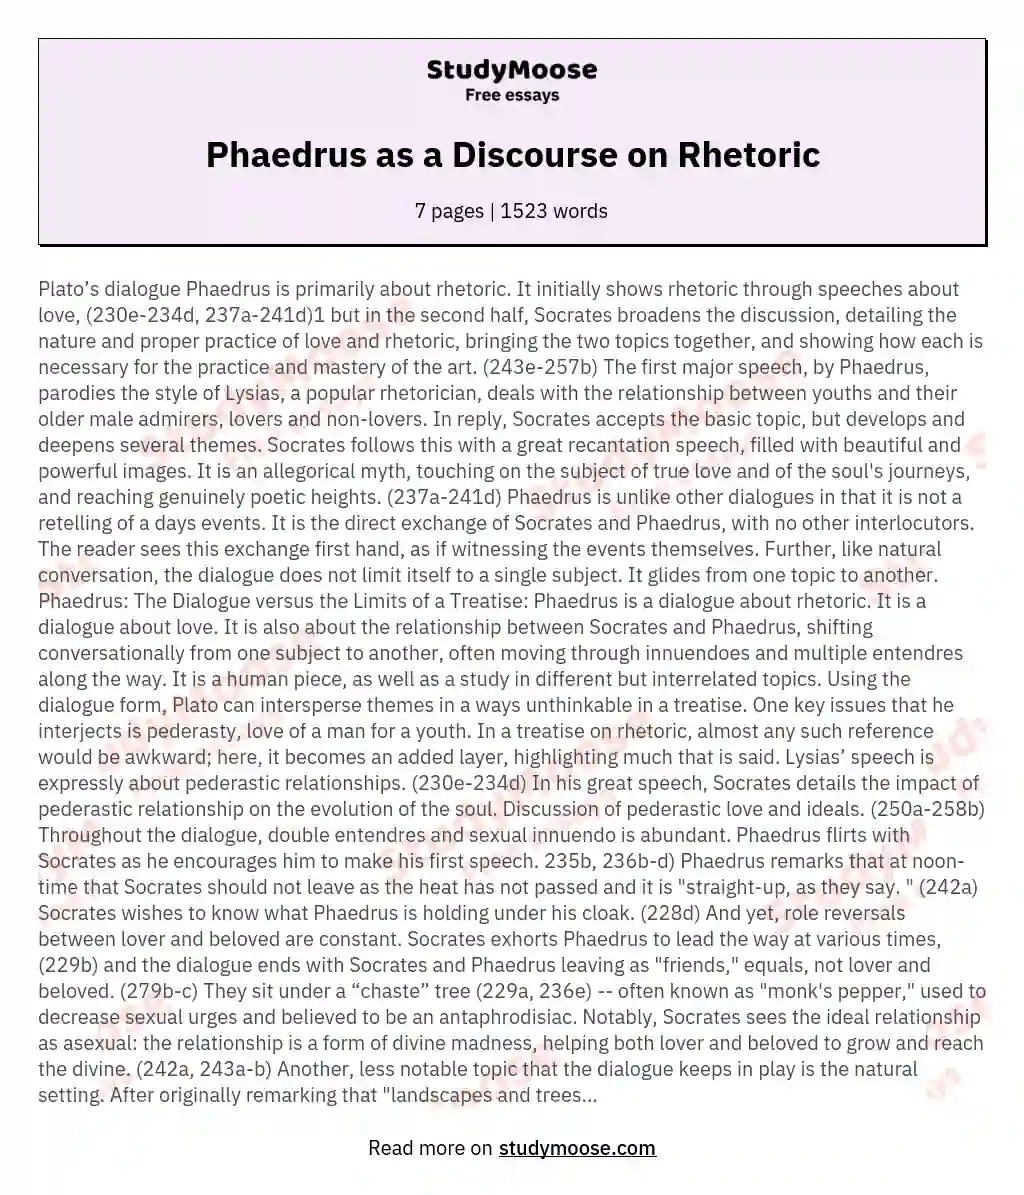 Phaedrus as a Discourse on Rhetoric essay